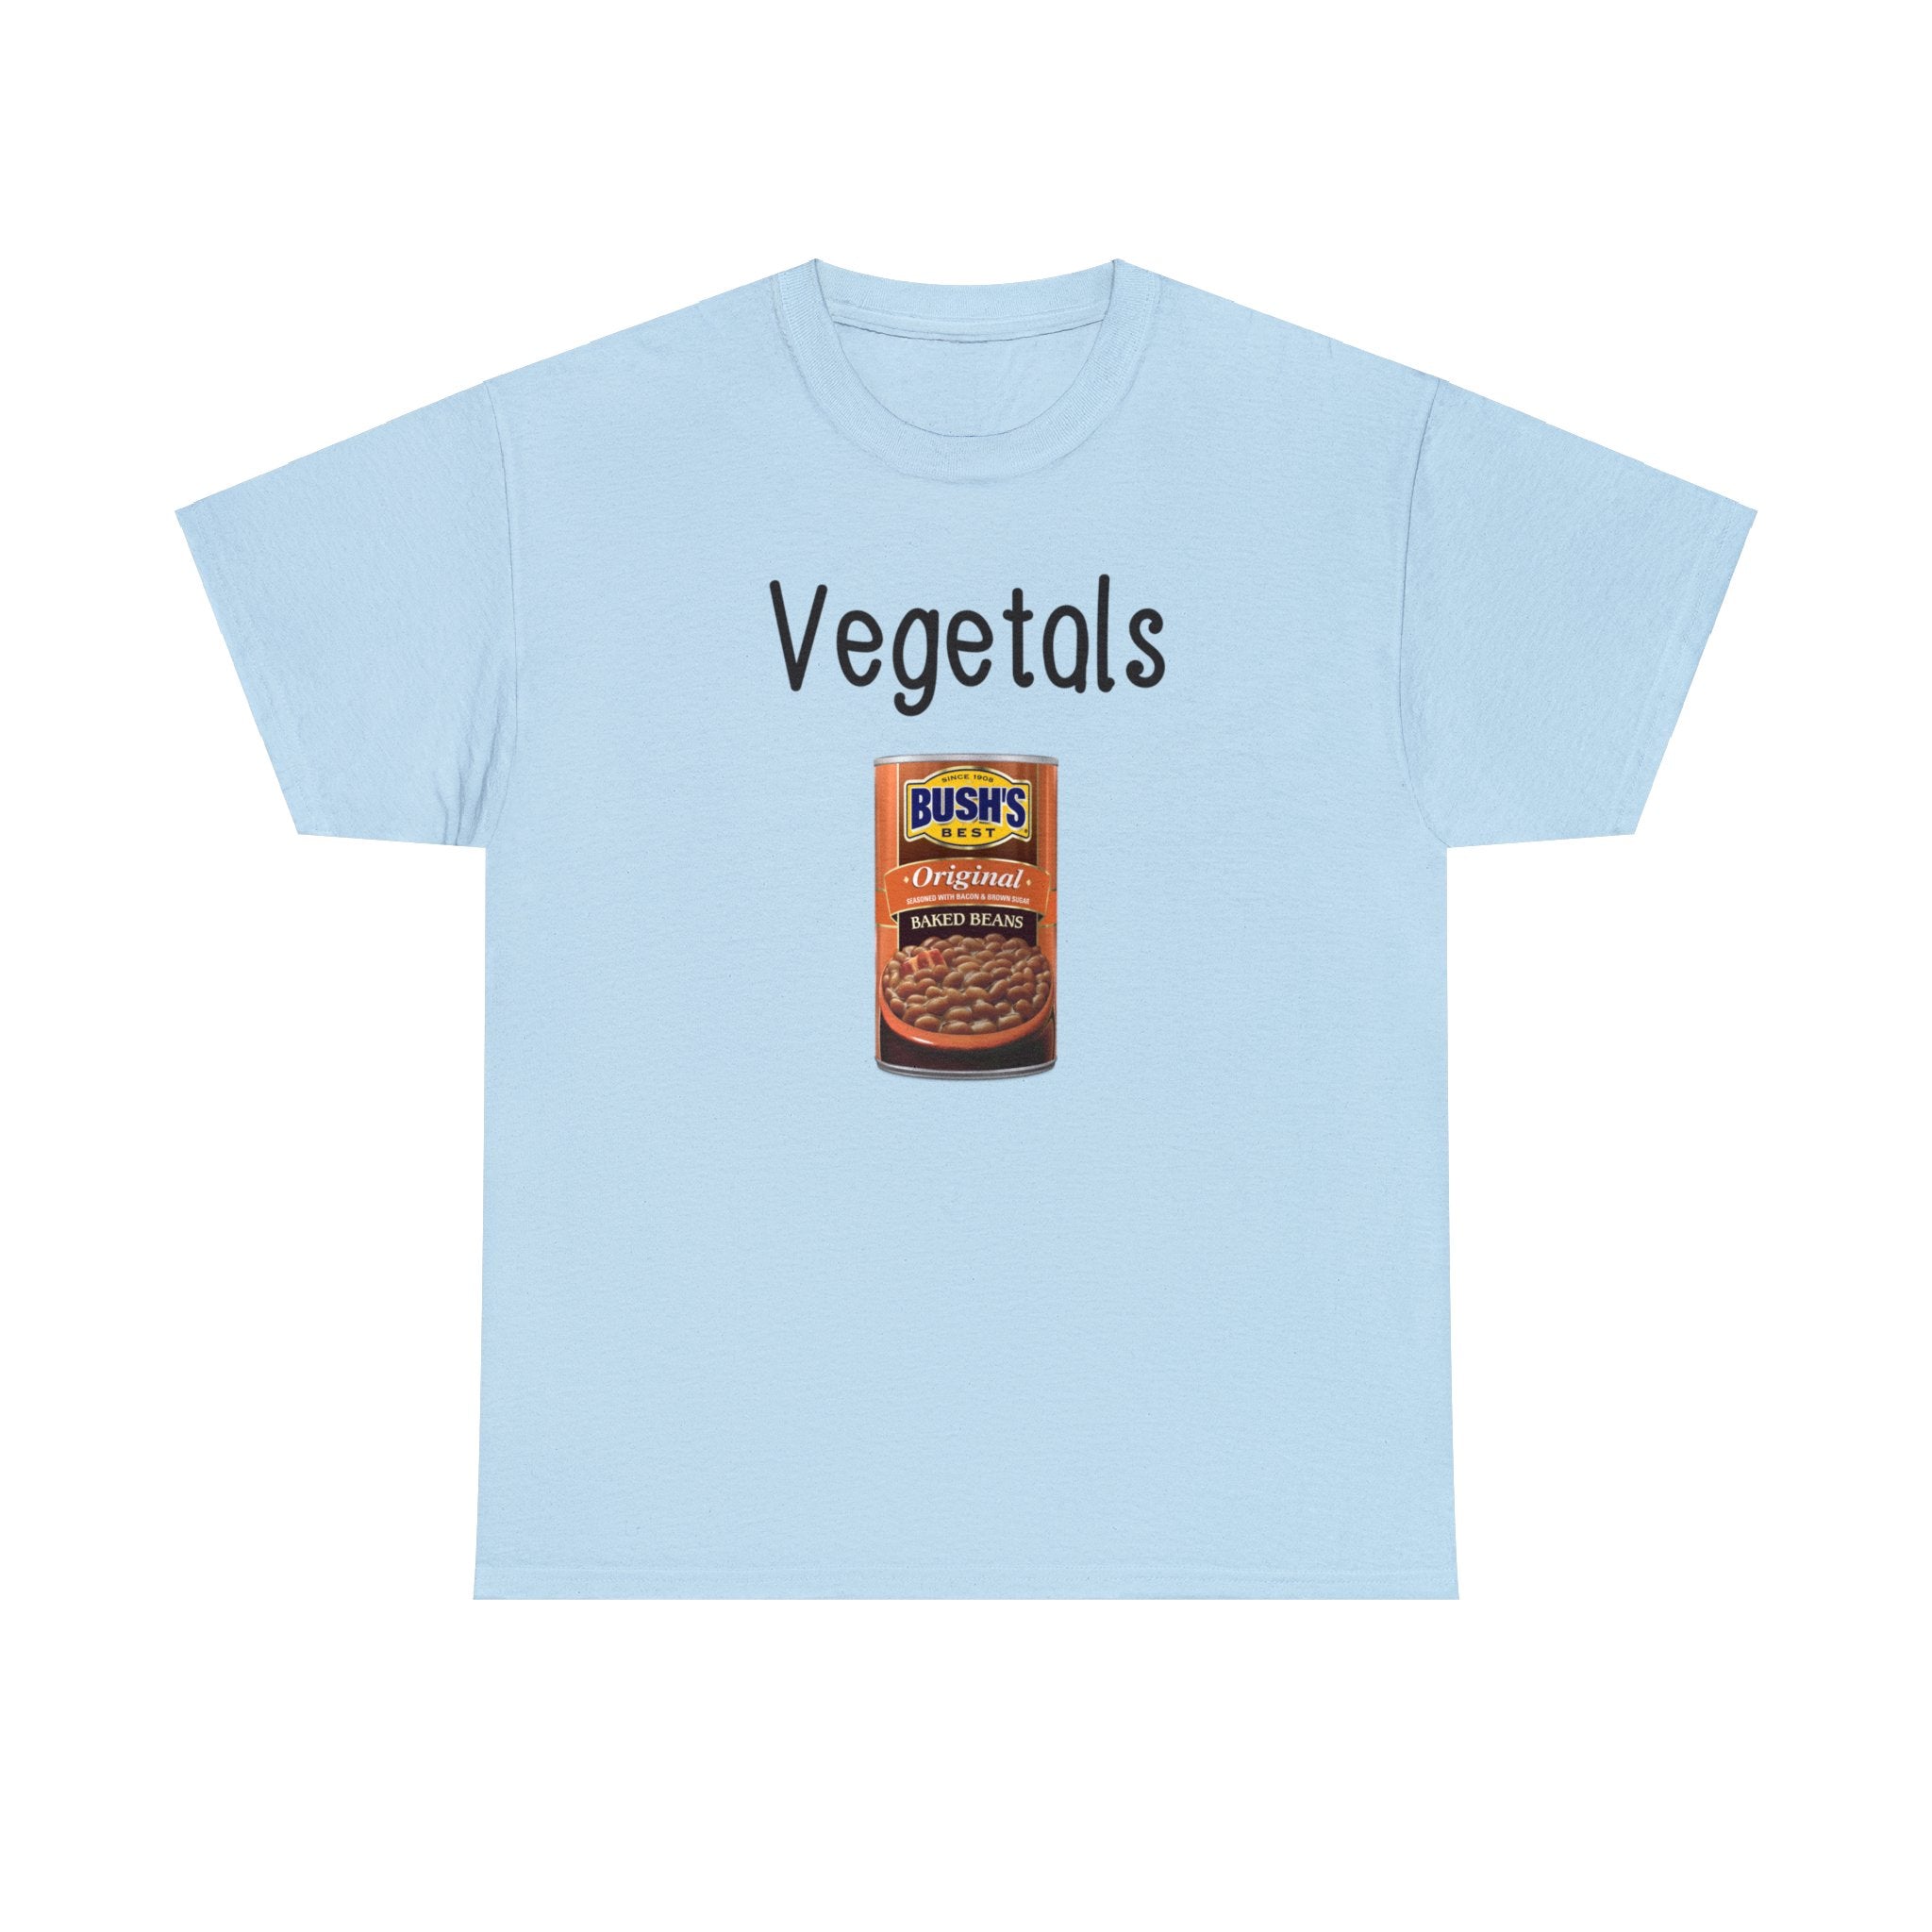 "Vegetals" baked beans t